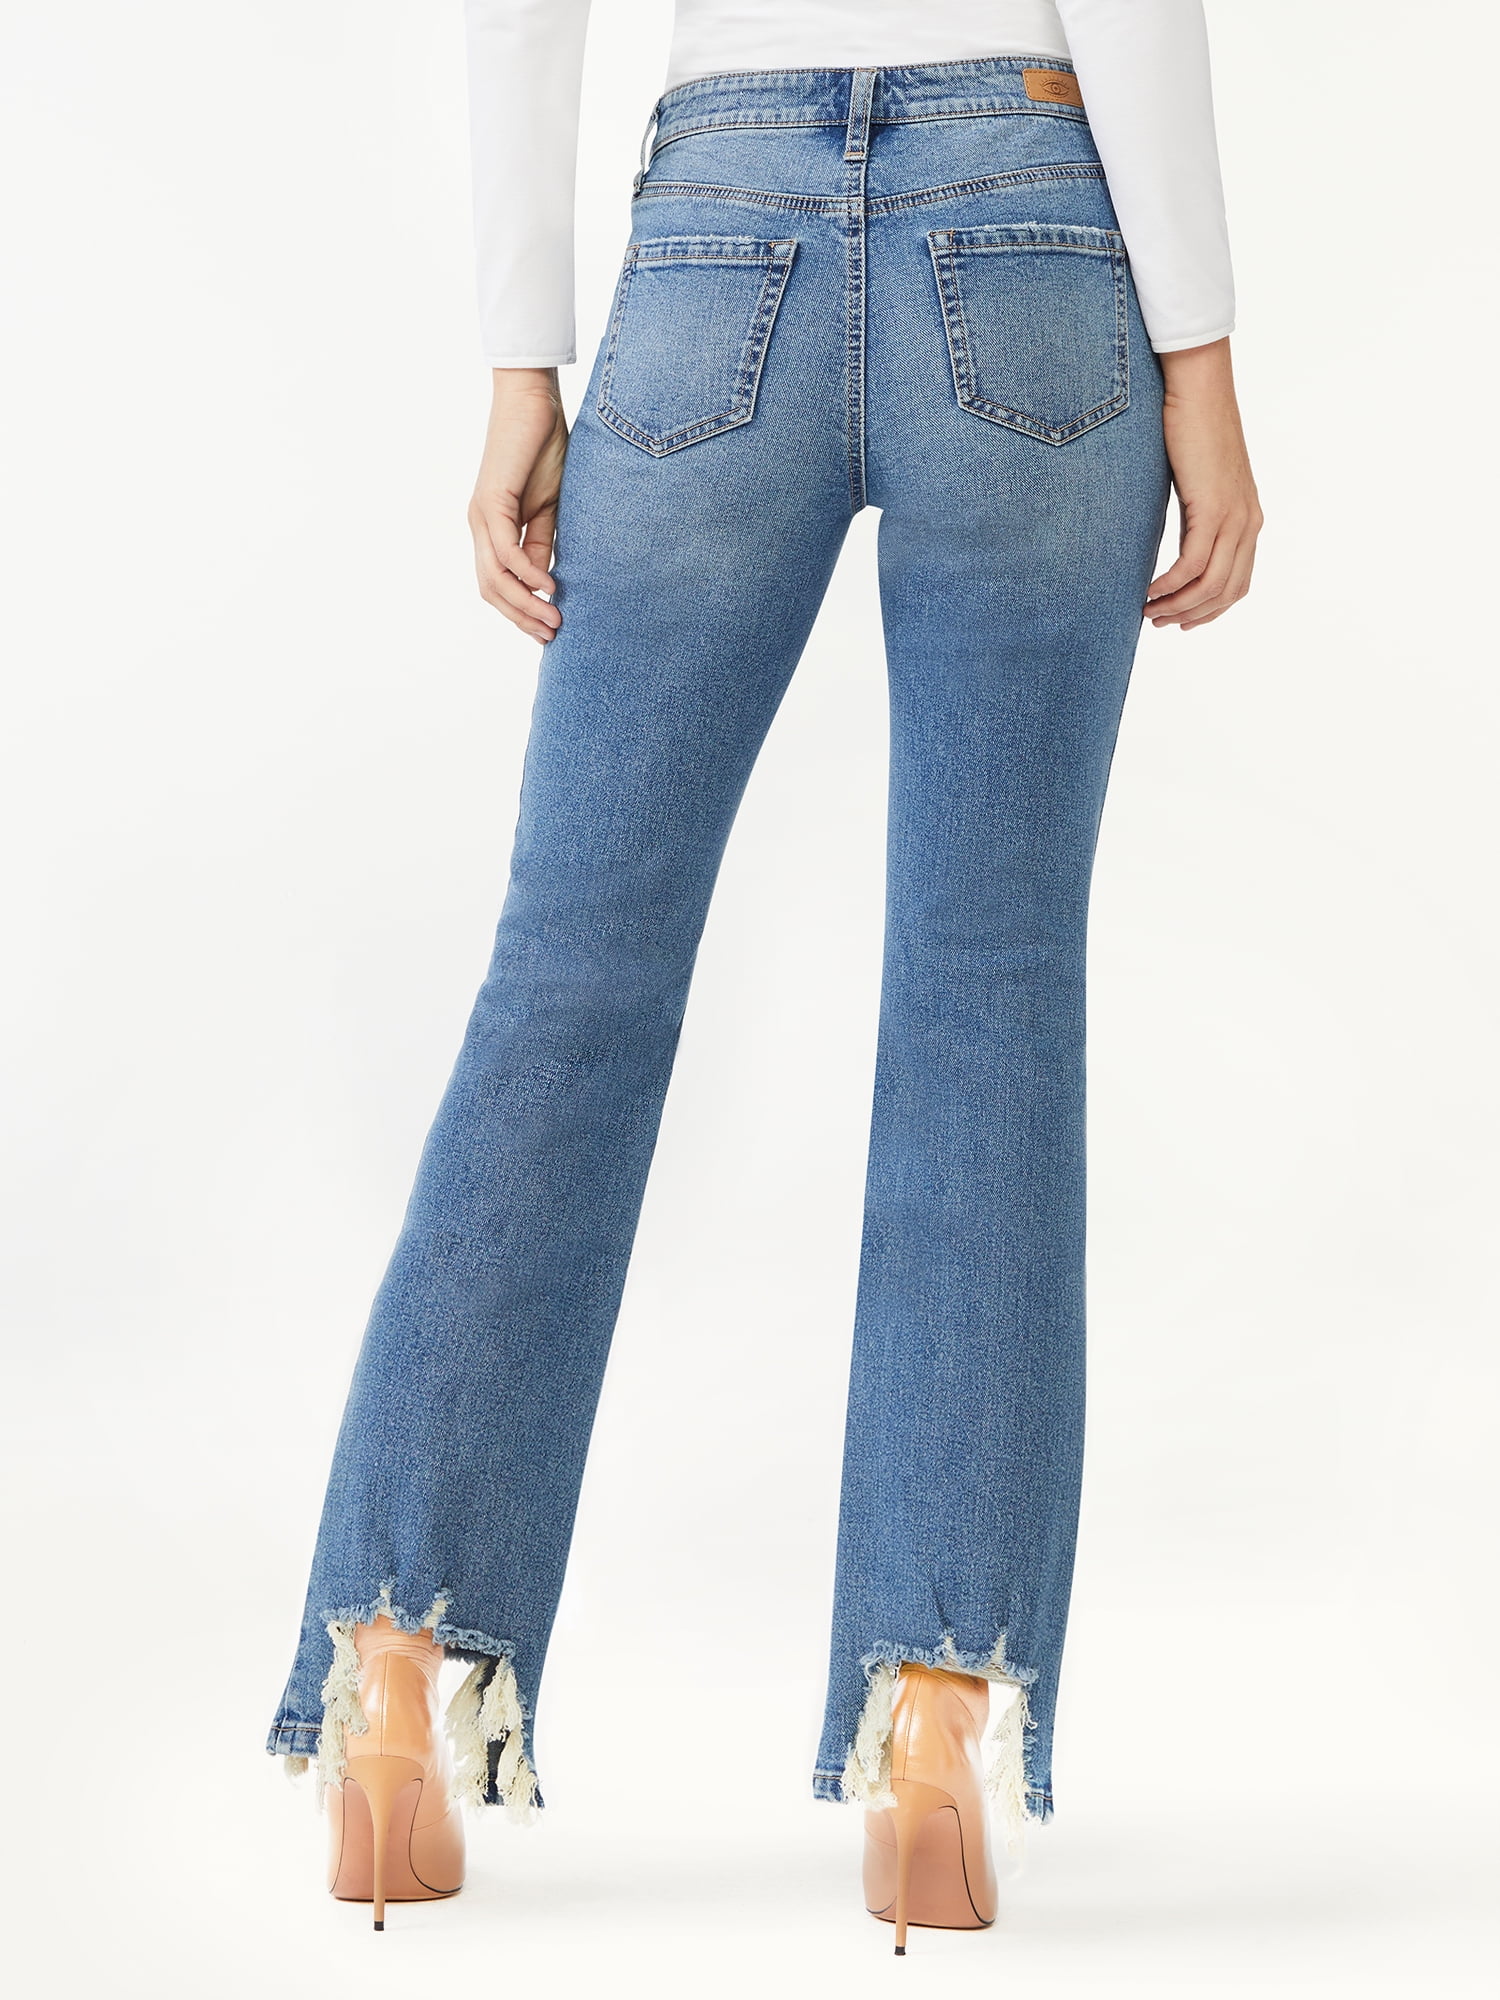 Sofia Jeans Women's Mayra High Waist Crop Kick Flare Jeans - Walmart.com